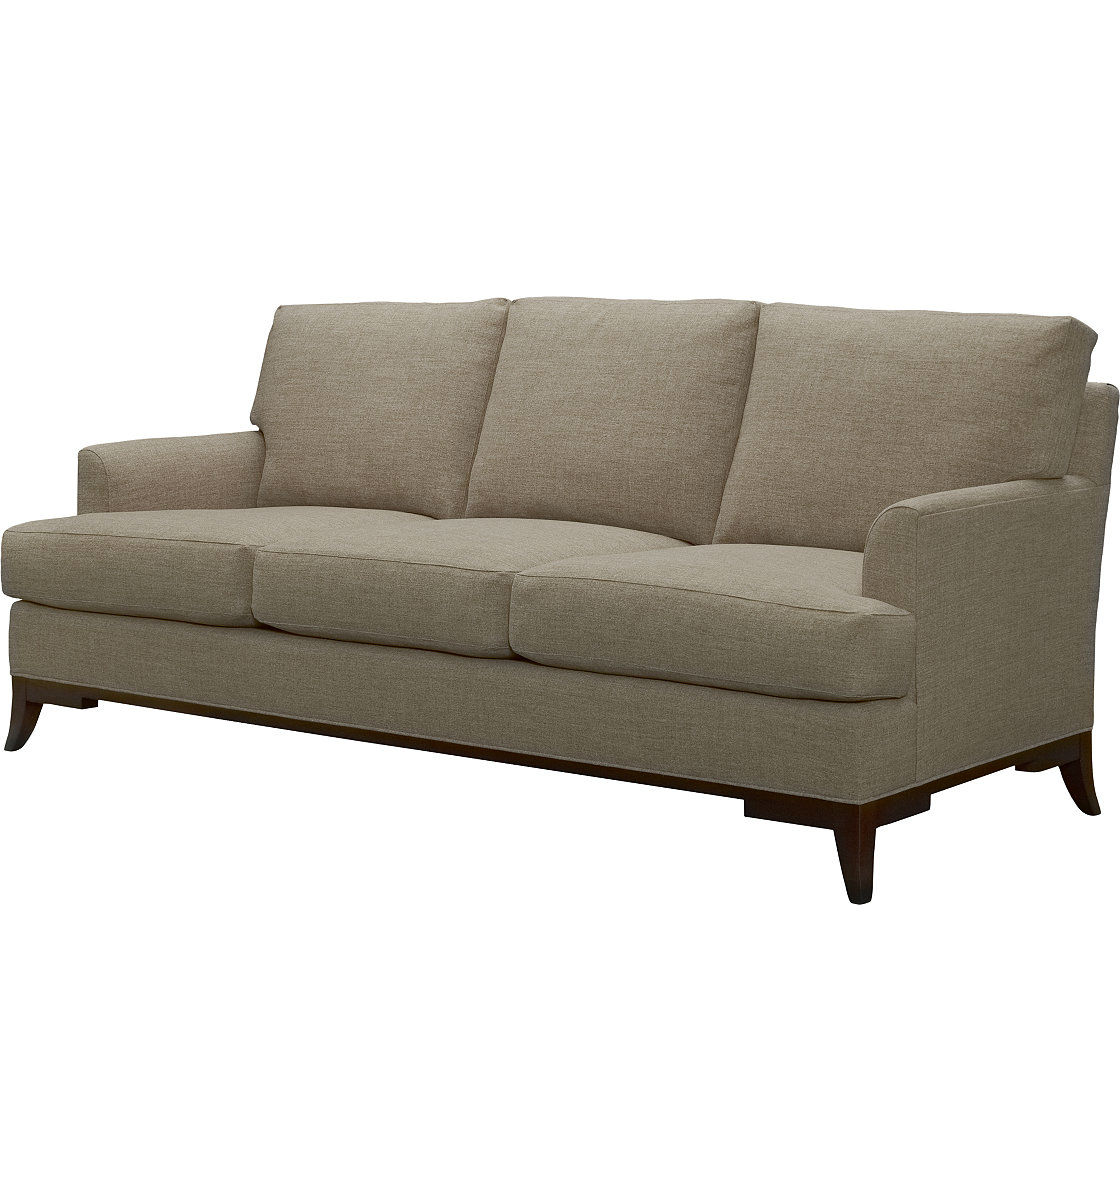 sofa paramount